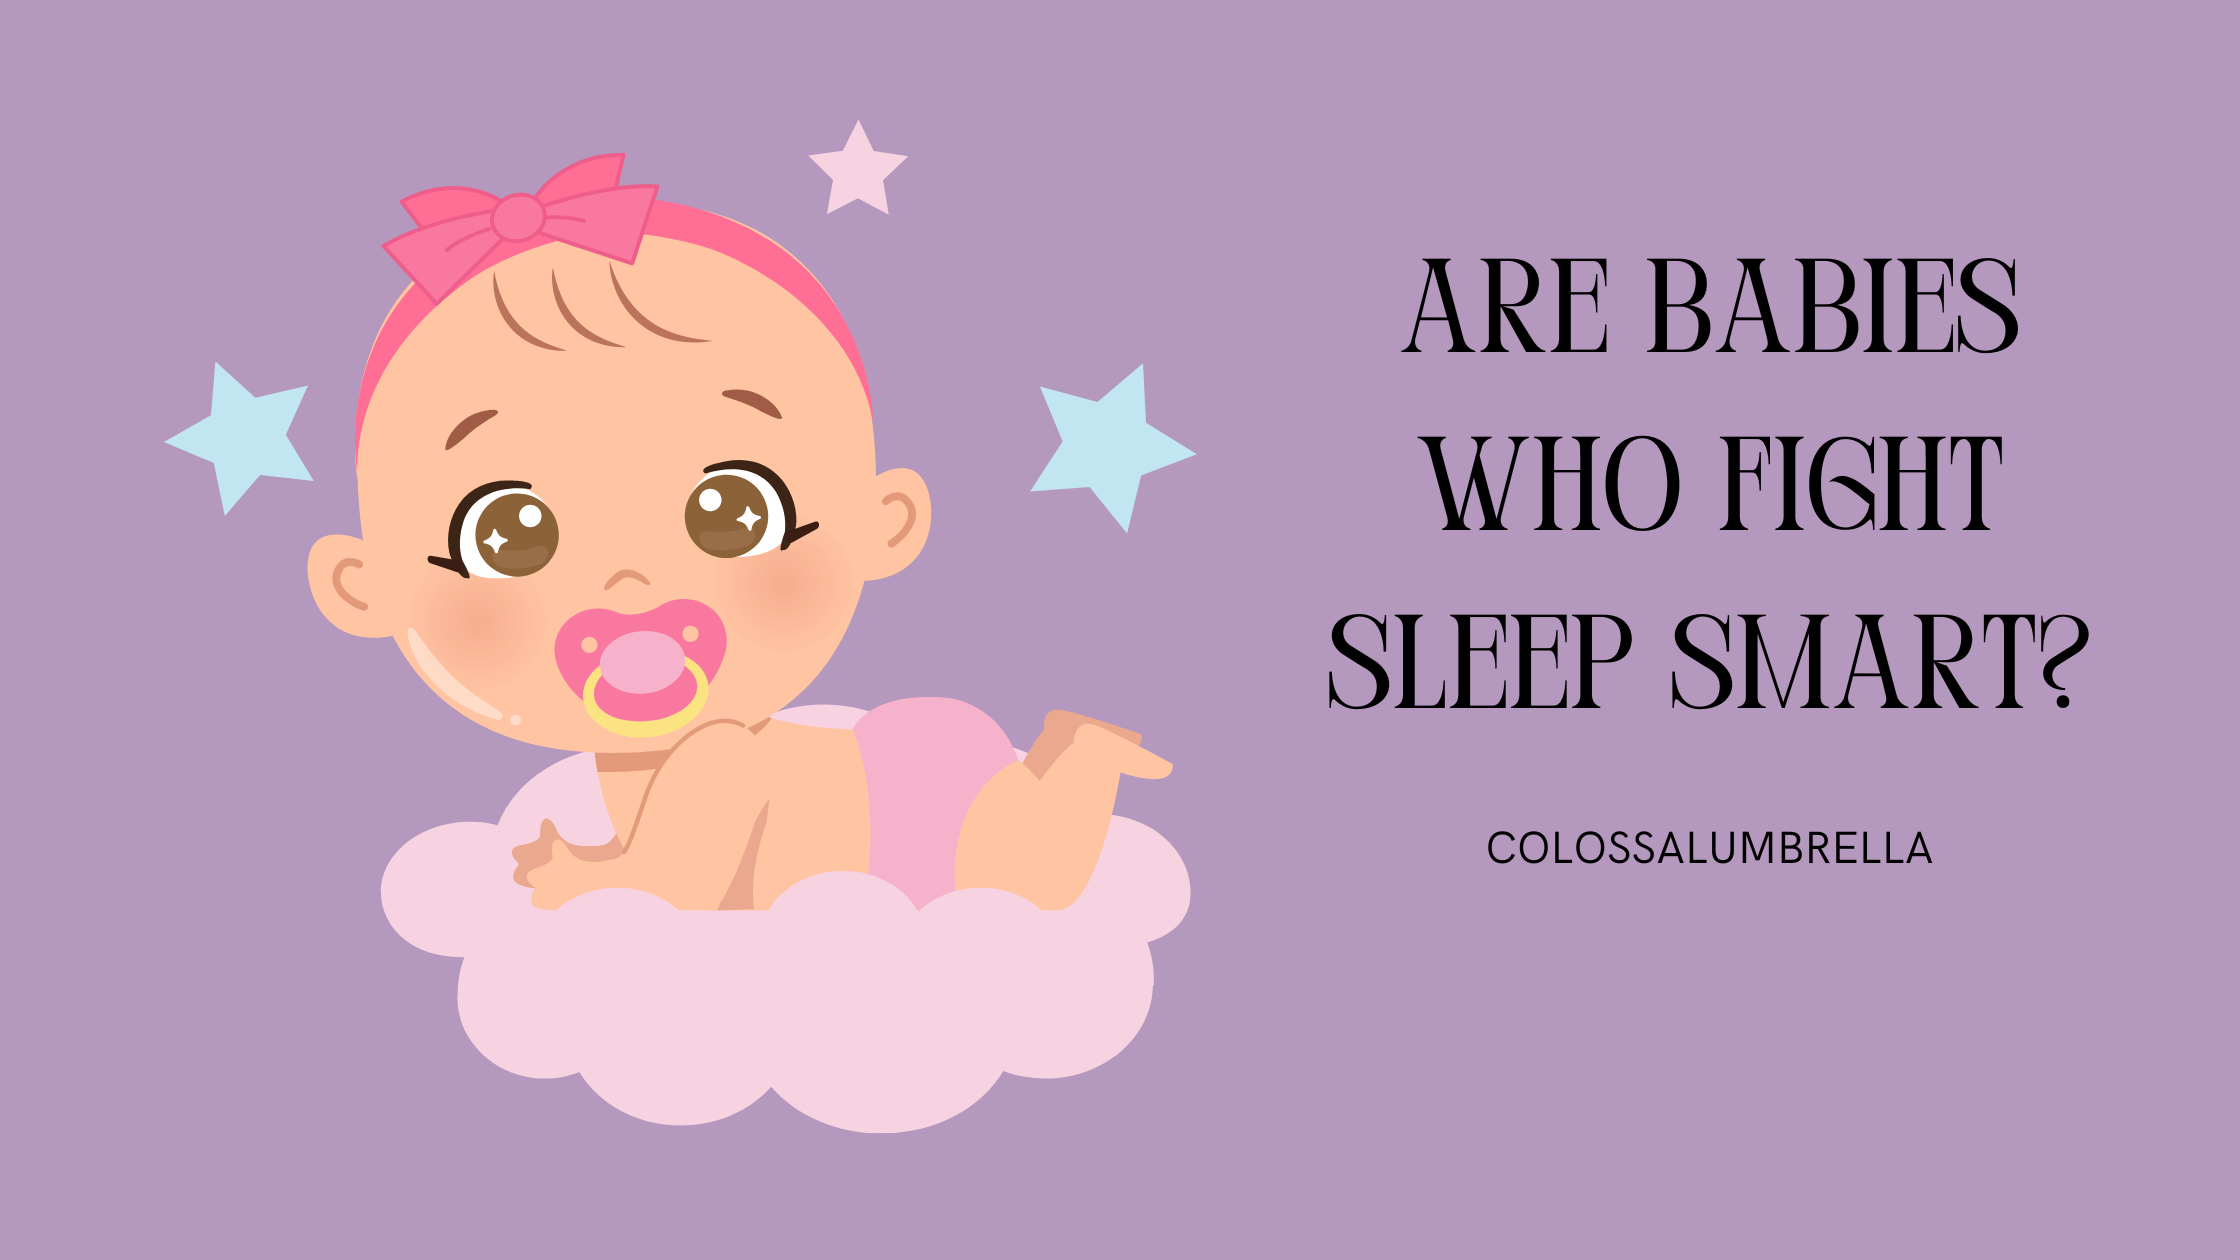 Are babies who fight sleep smart